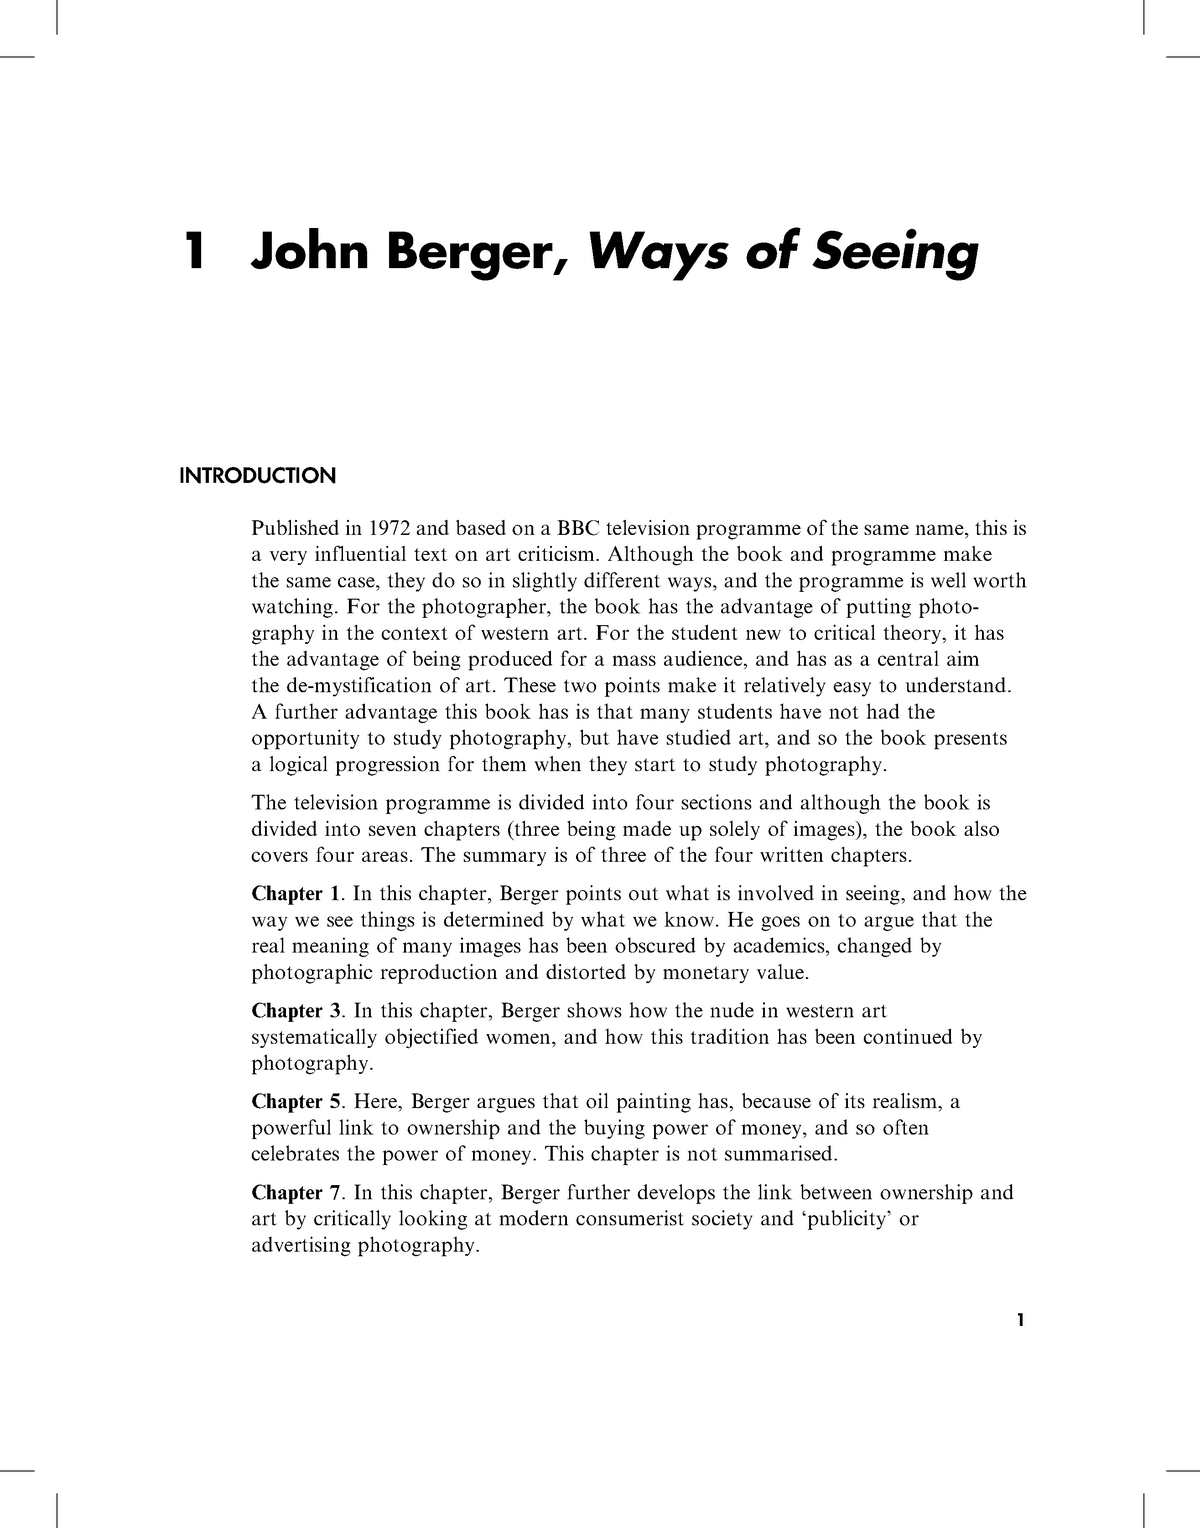 john berger ways of seeing summary chapter 7